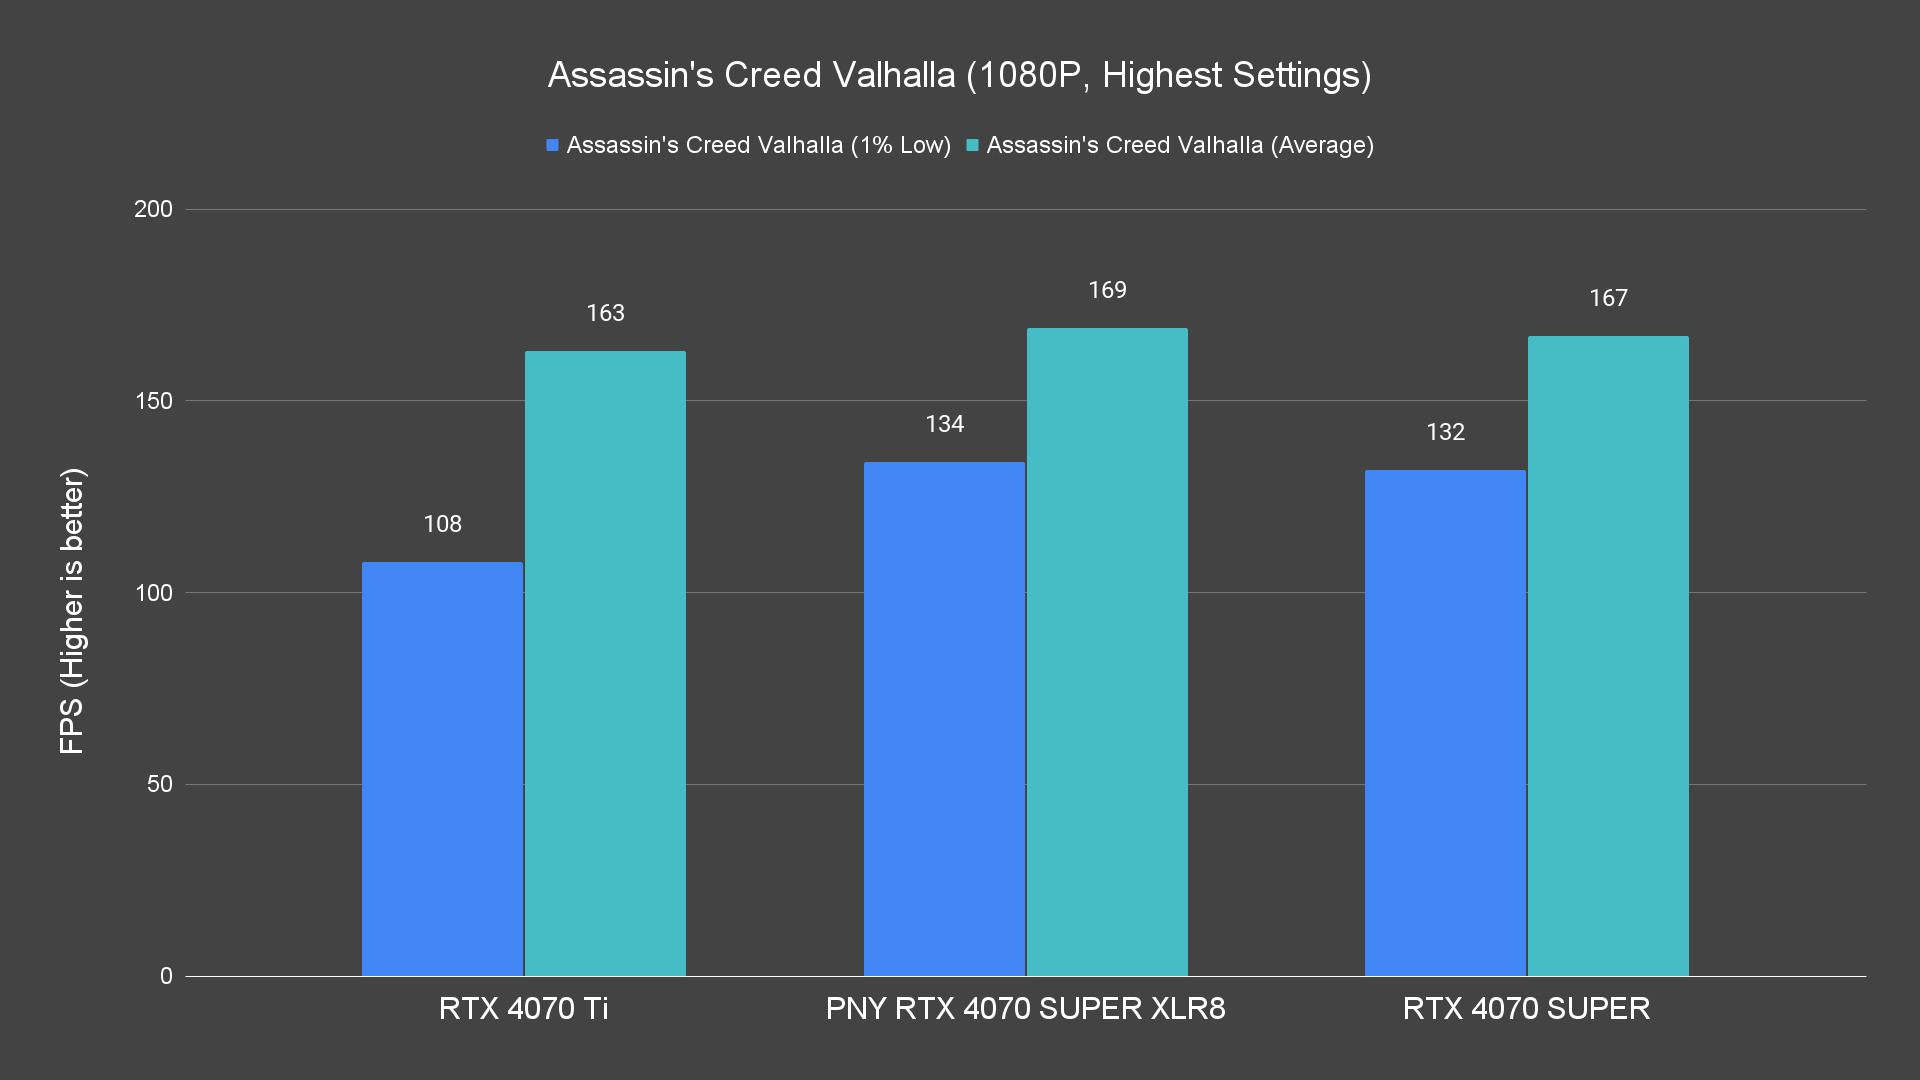 Assassin's Creed Valhalla (1080P, Highest Settings) Raster PNY RTX 4070 SUPER XLR8